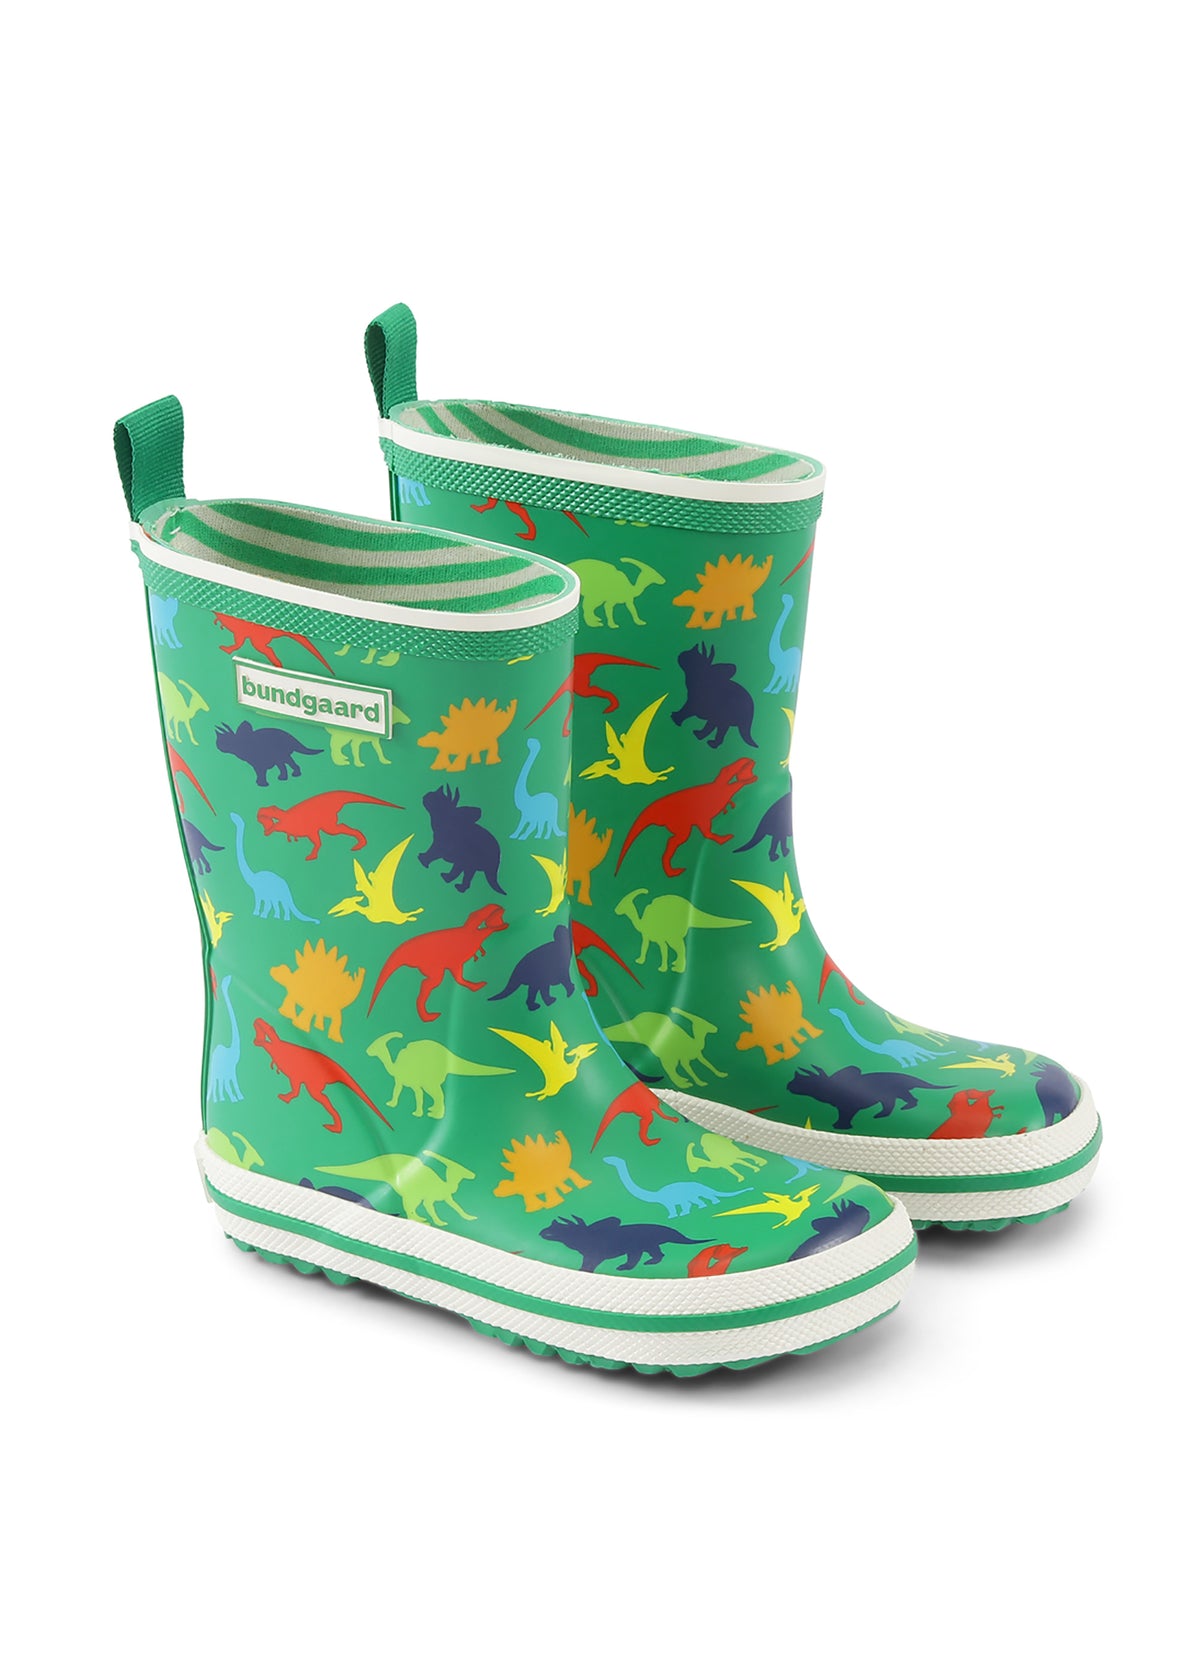 Rubber boots - Dino, dinosaurs on green sole, Bundgaard Zero Heel